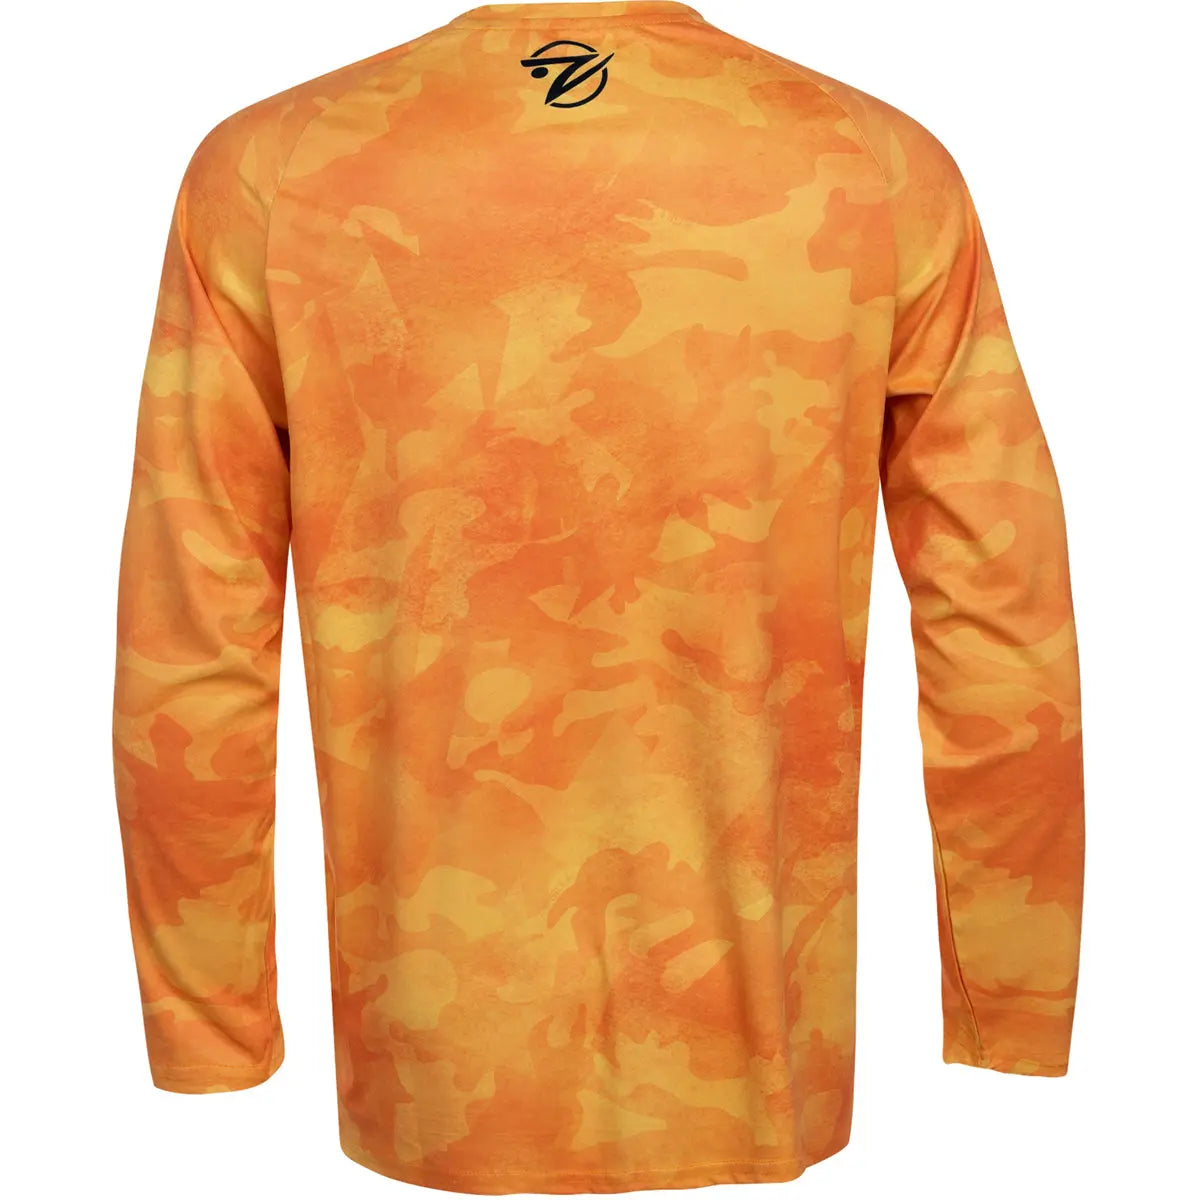 Gillz Contender Series Burnt UV Long Sleeve T-Shirt - Sun Orange Gillz